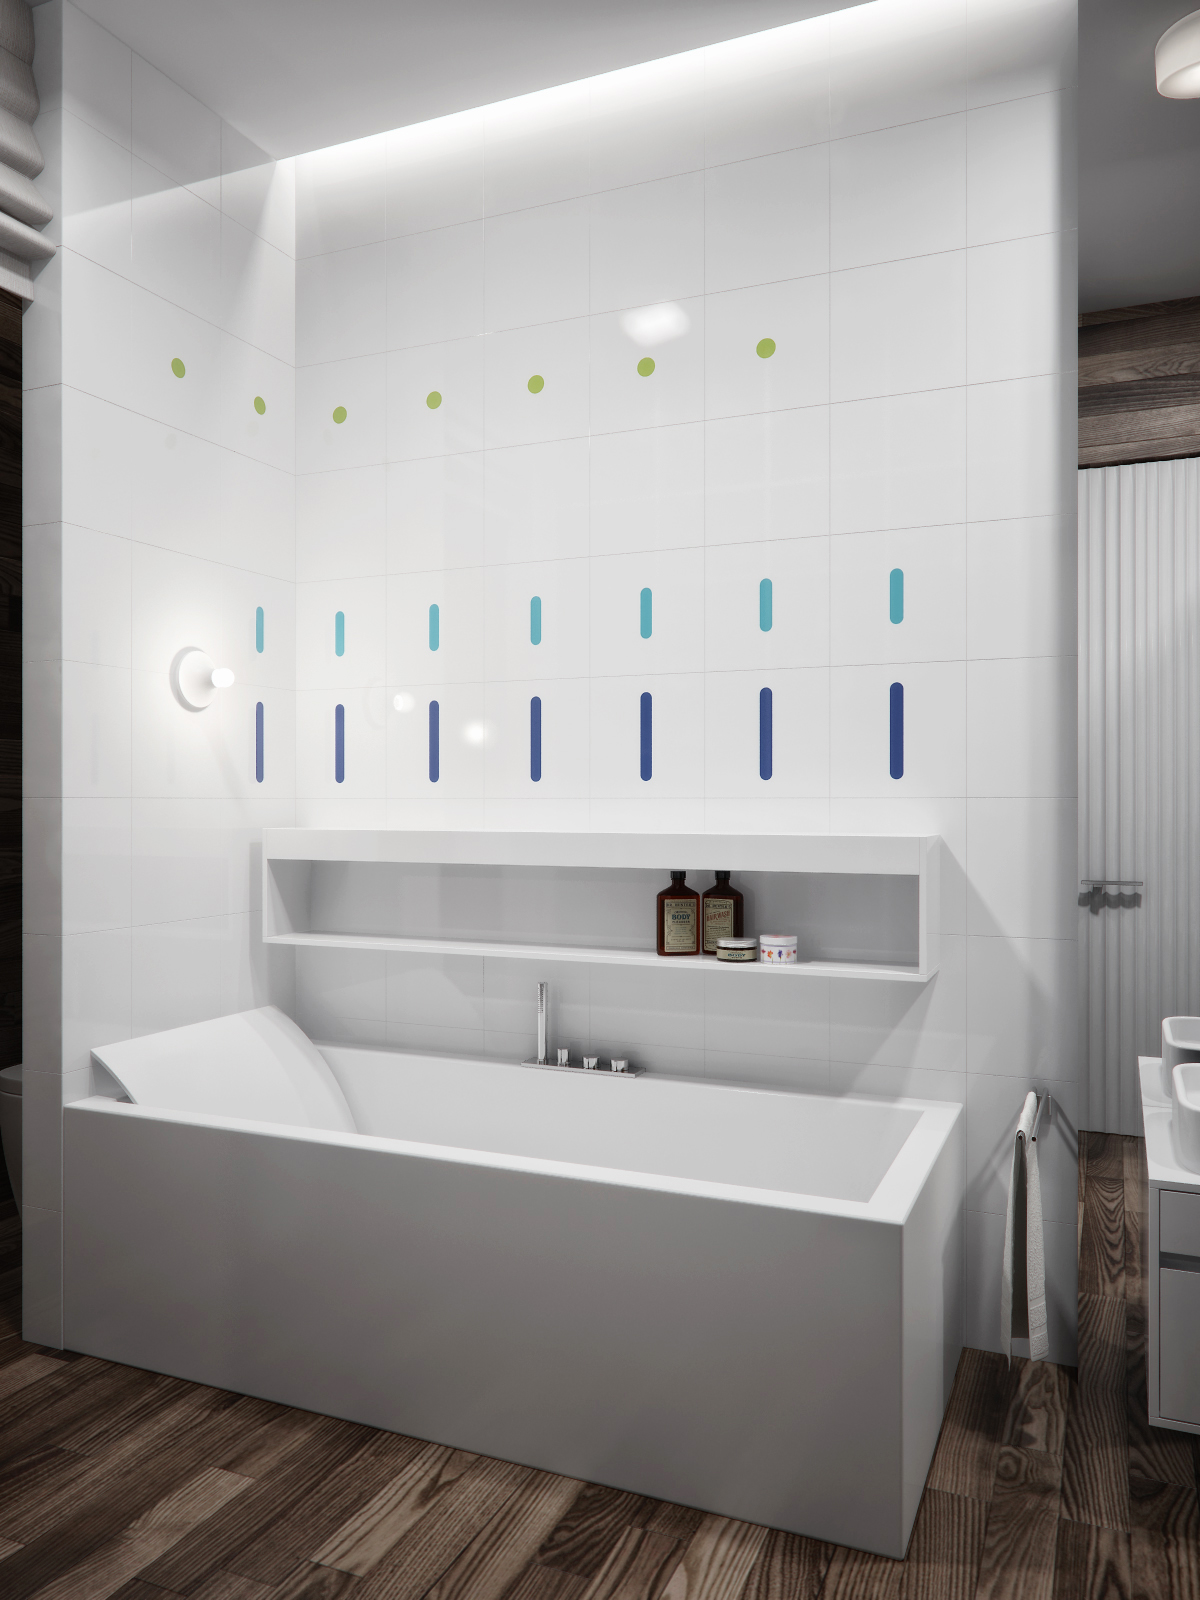 white bathroom design ideas